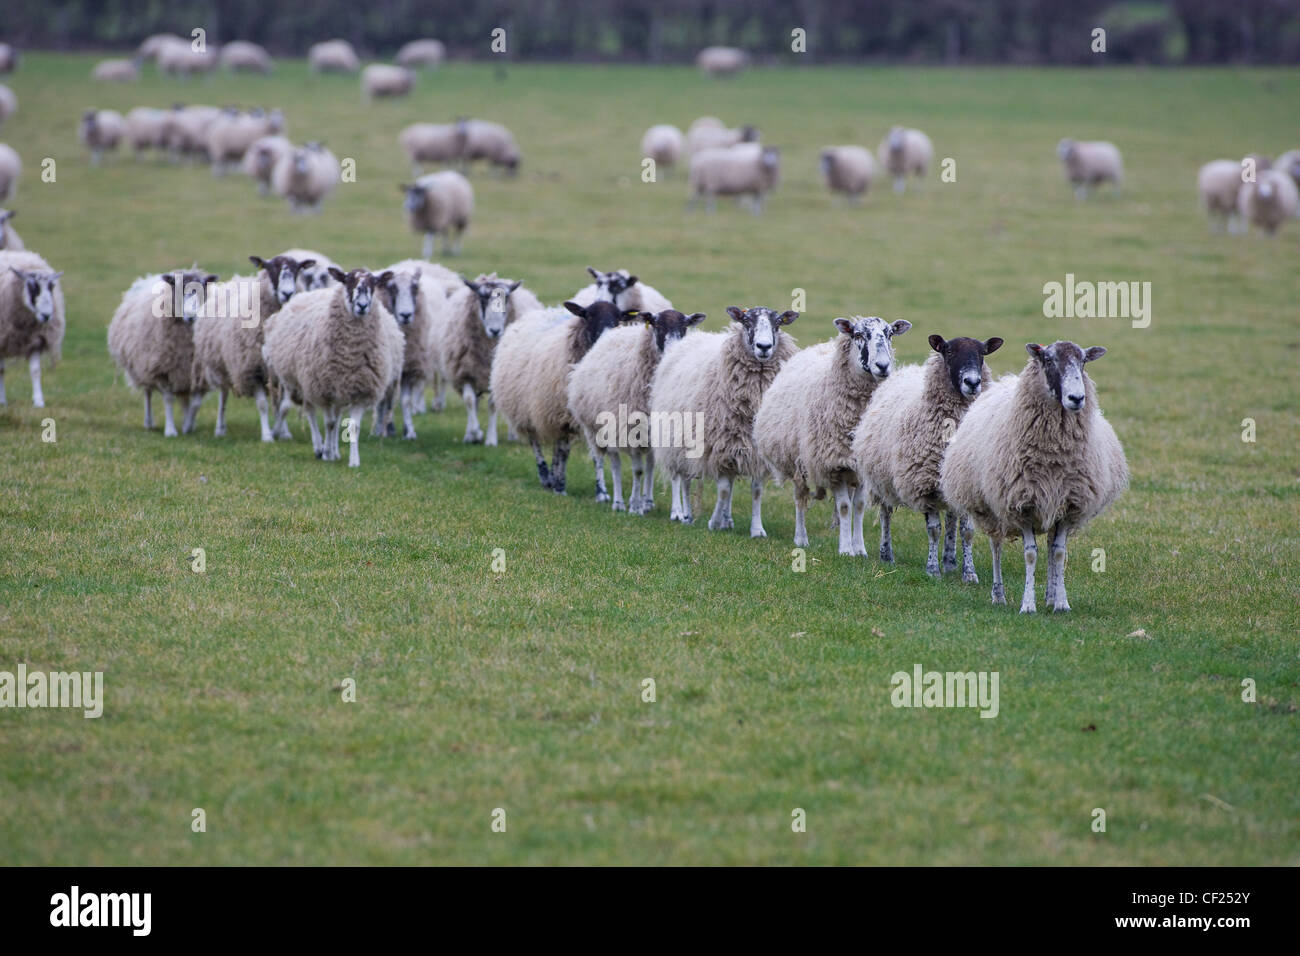 Sheep walking in line Stock Photo